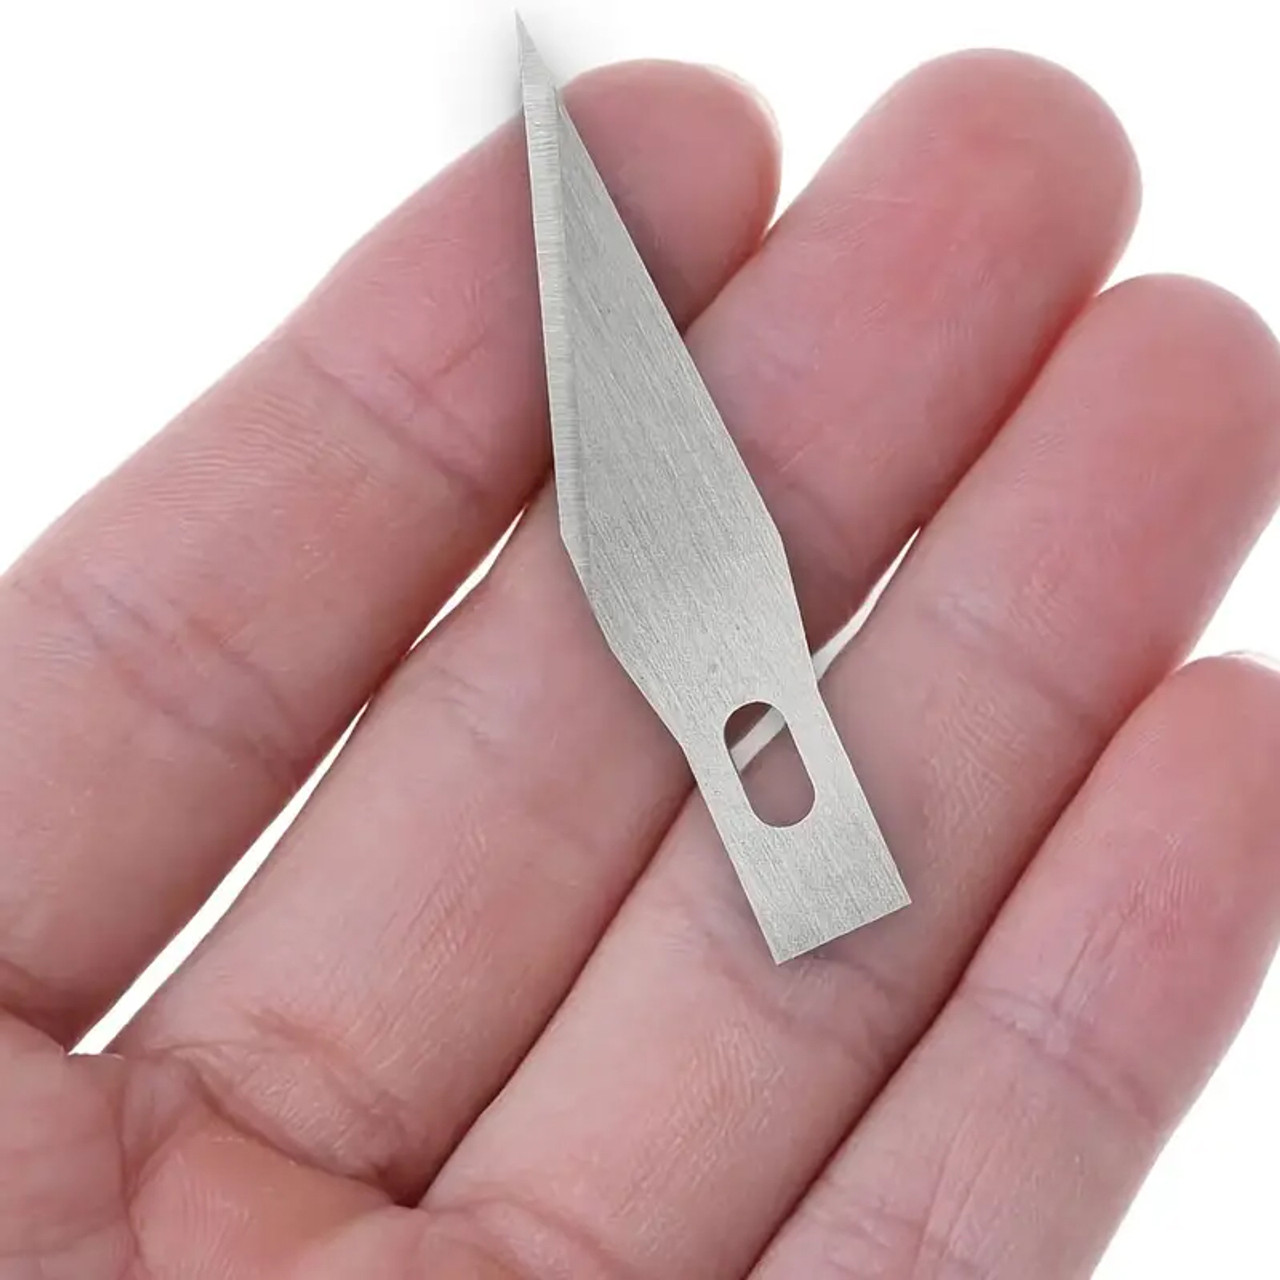 Xacto Knife High Quality Phone Repair Cutting Tool